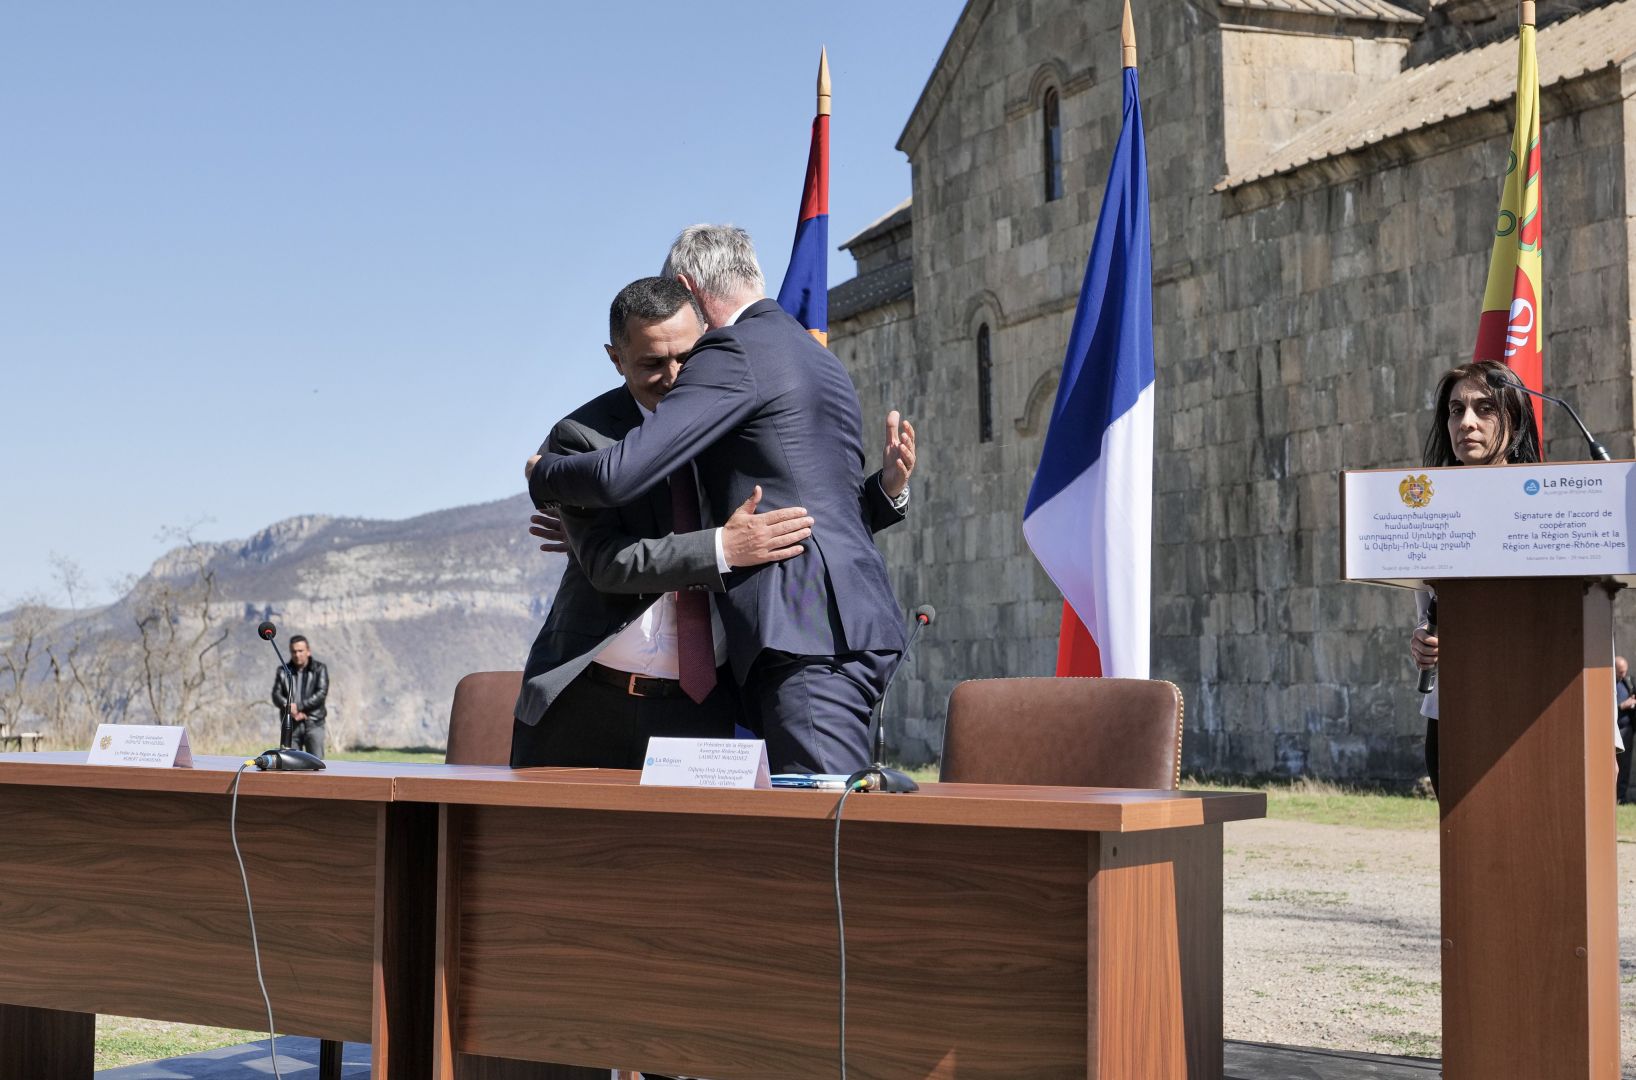 French drama of Armenian love: Laurent's being aghast at Azerbaijan flag in Karabakh